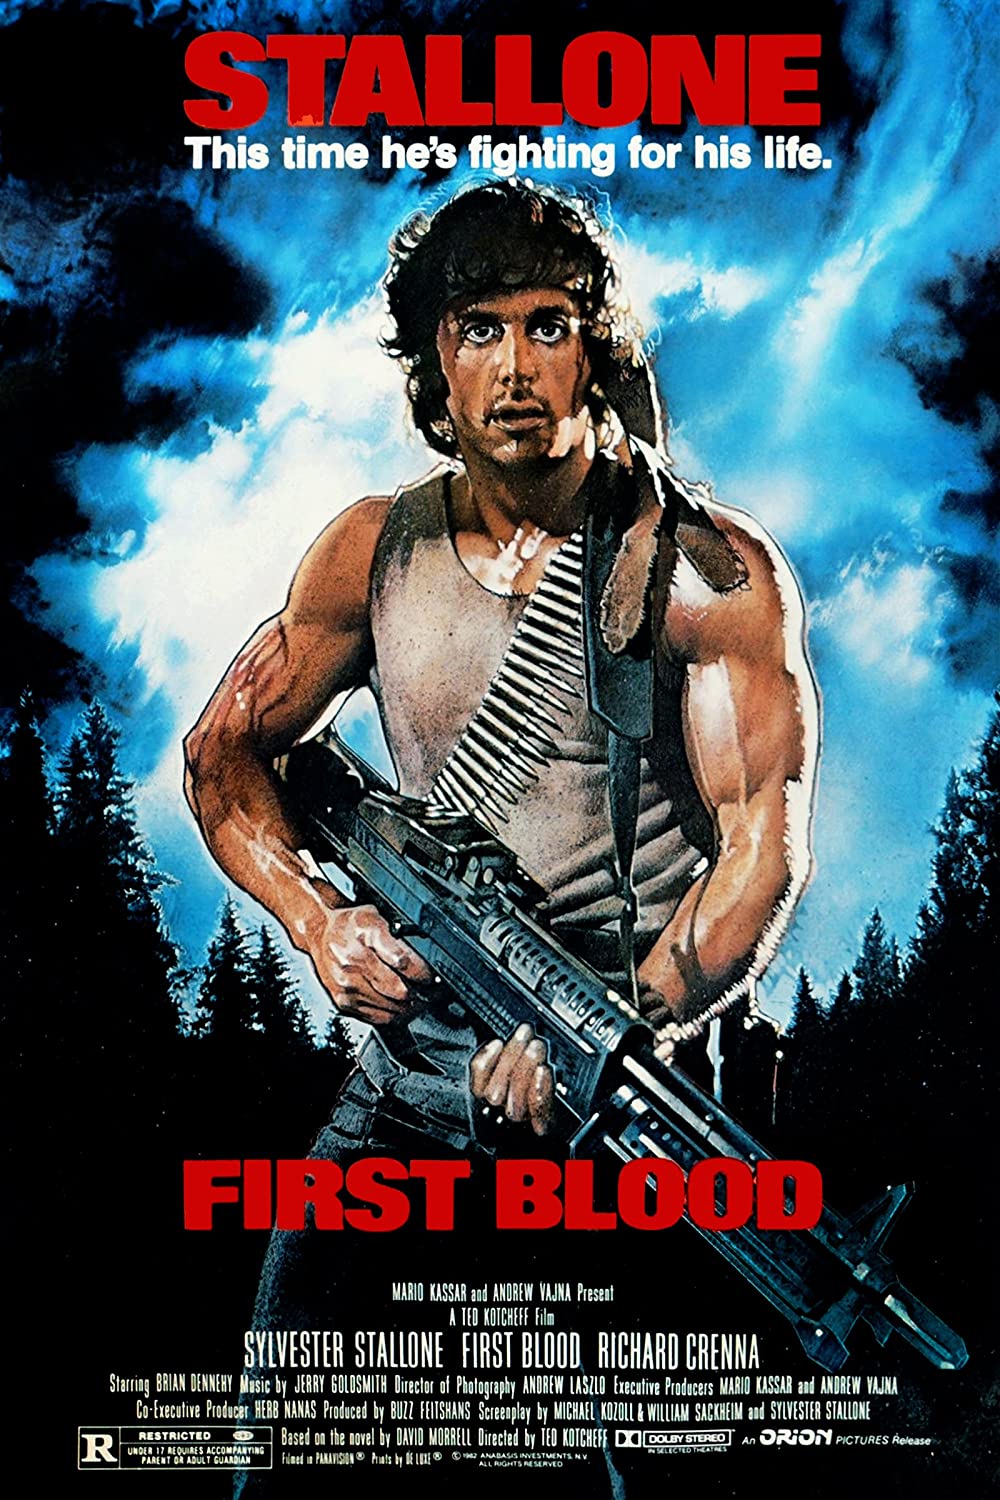 دانلود فیلم First Blood 1982